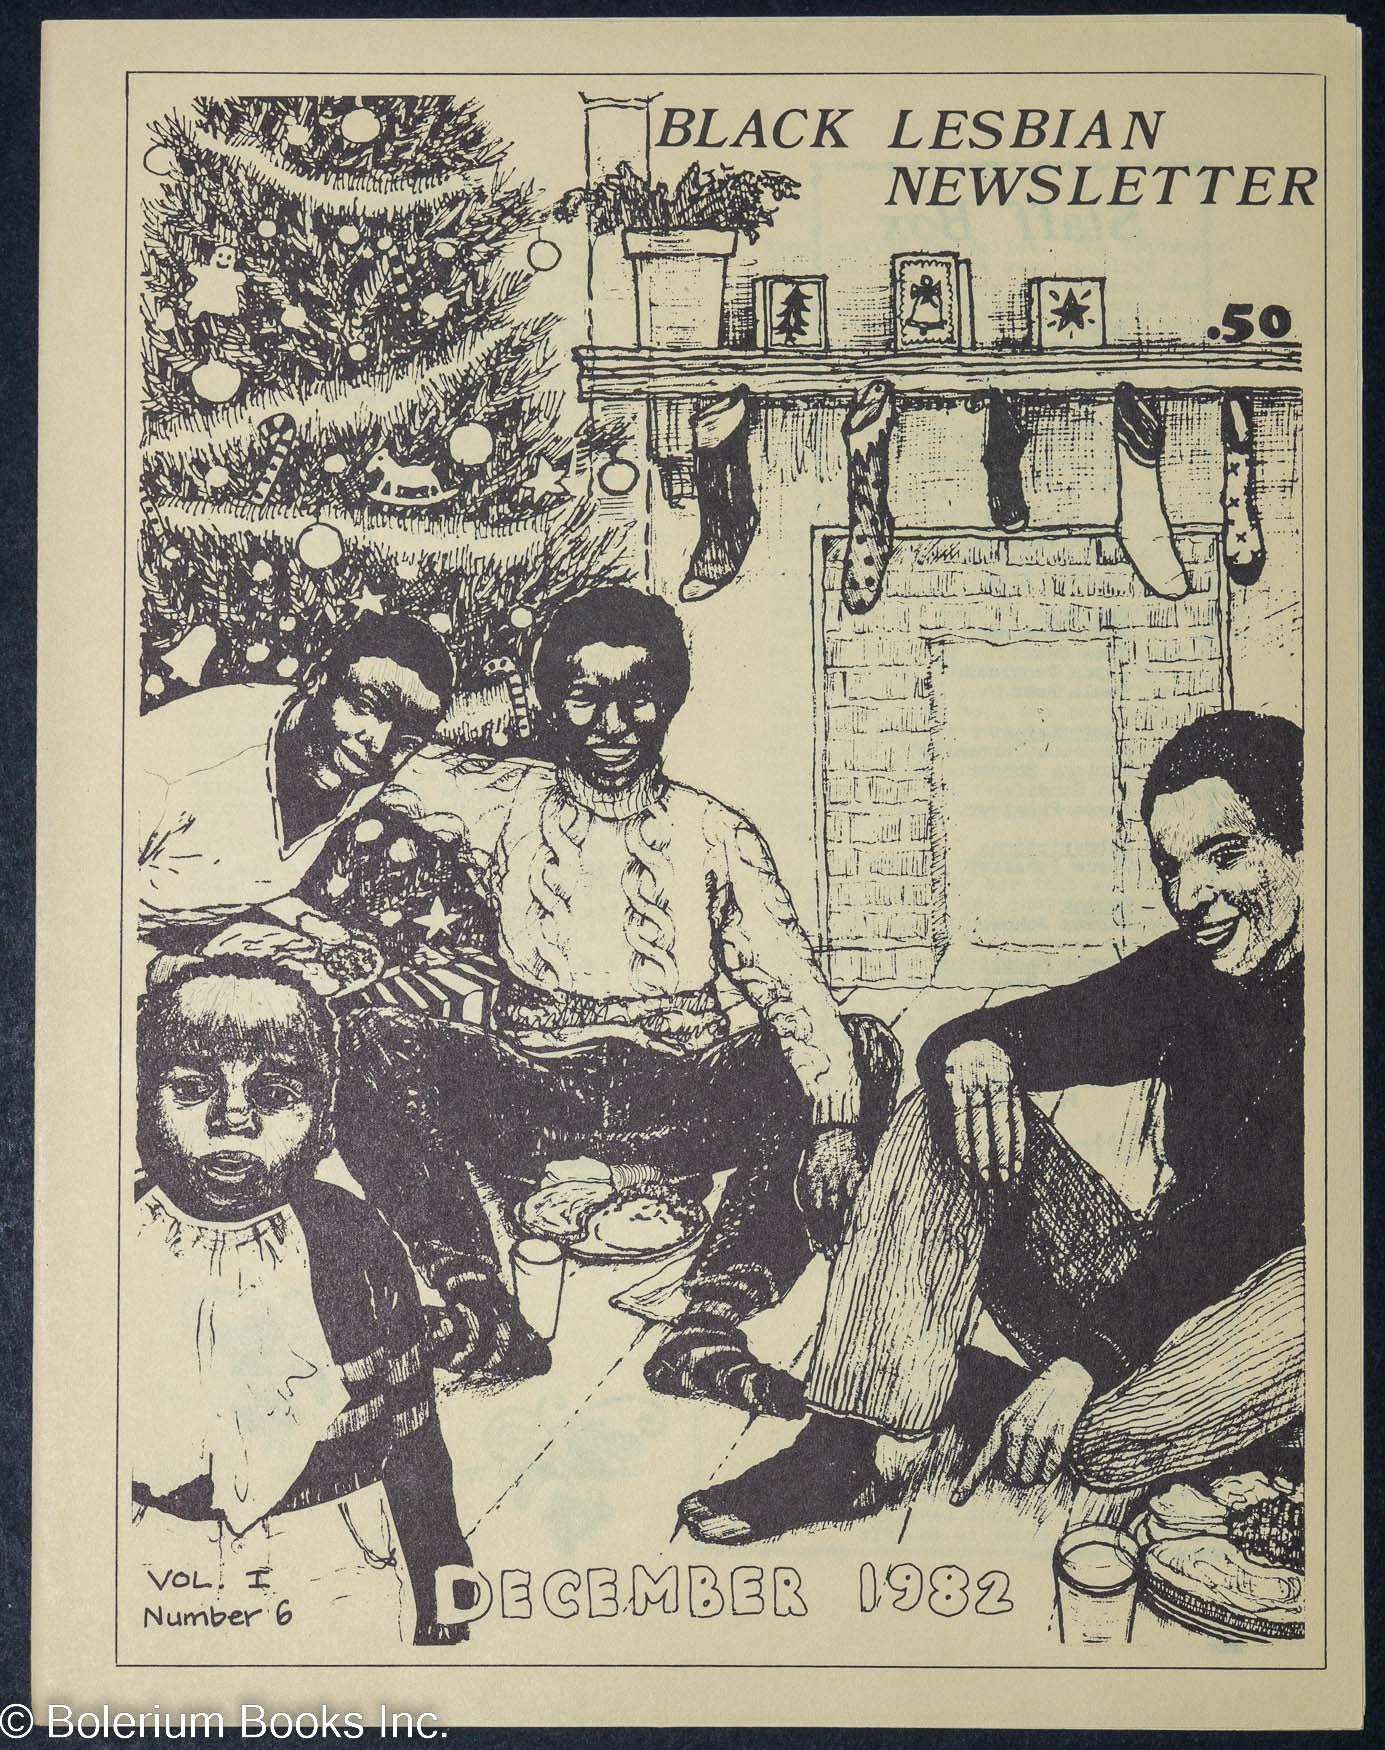 Black lesbian newsletter; Vol. 1, No. 6 December 1982 on Bolerium Books